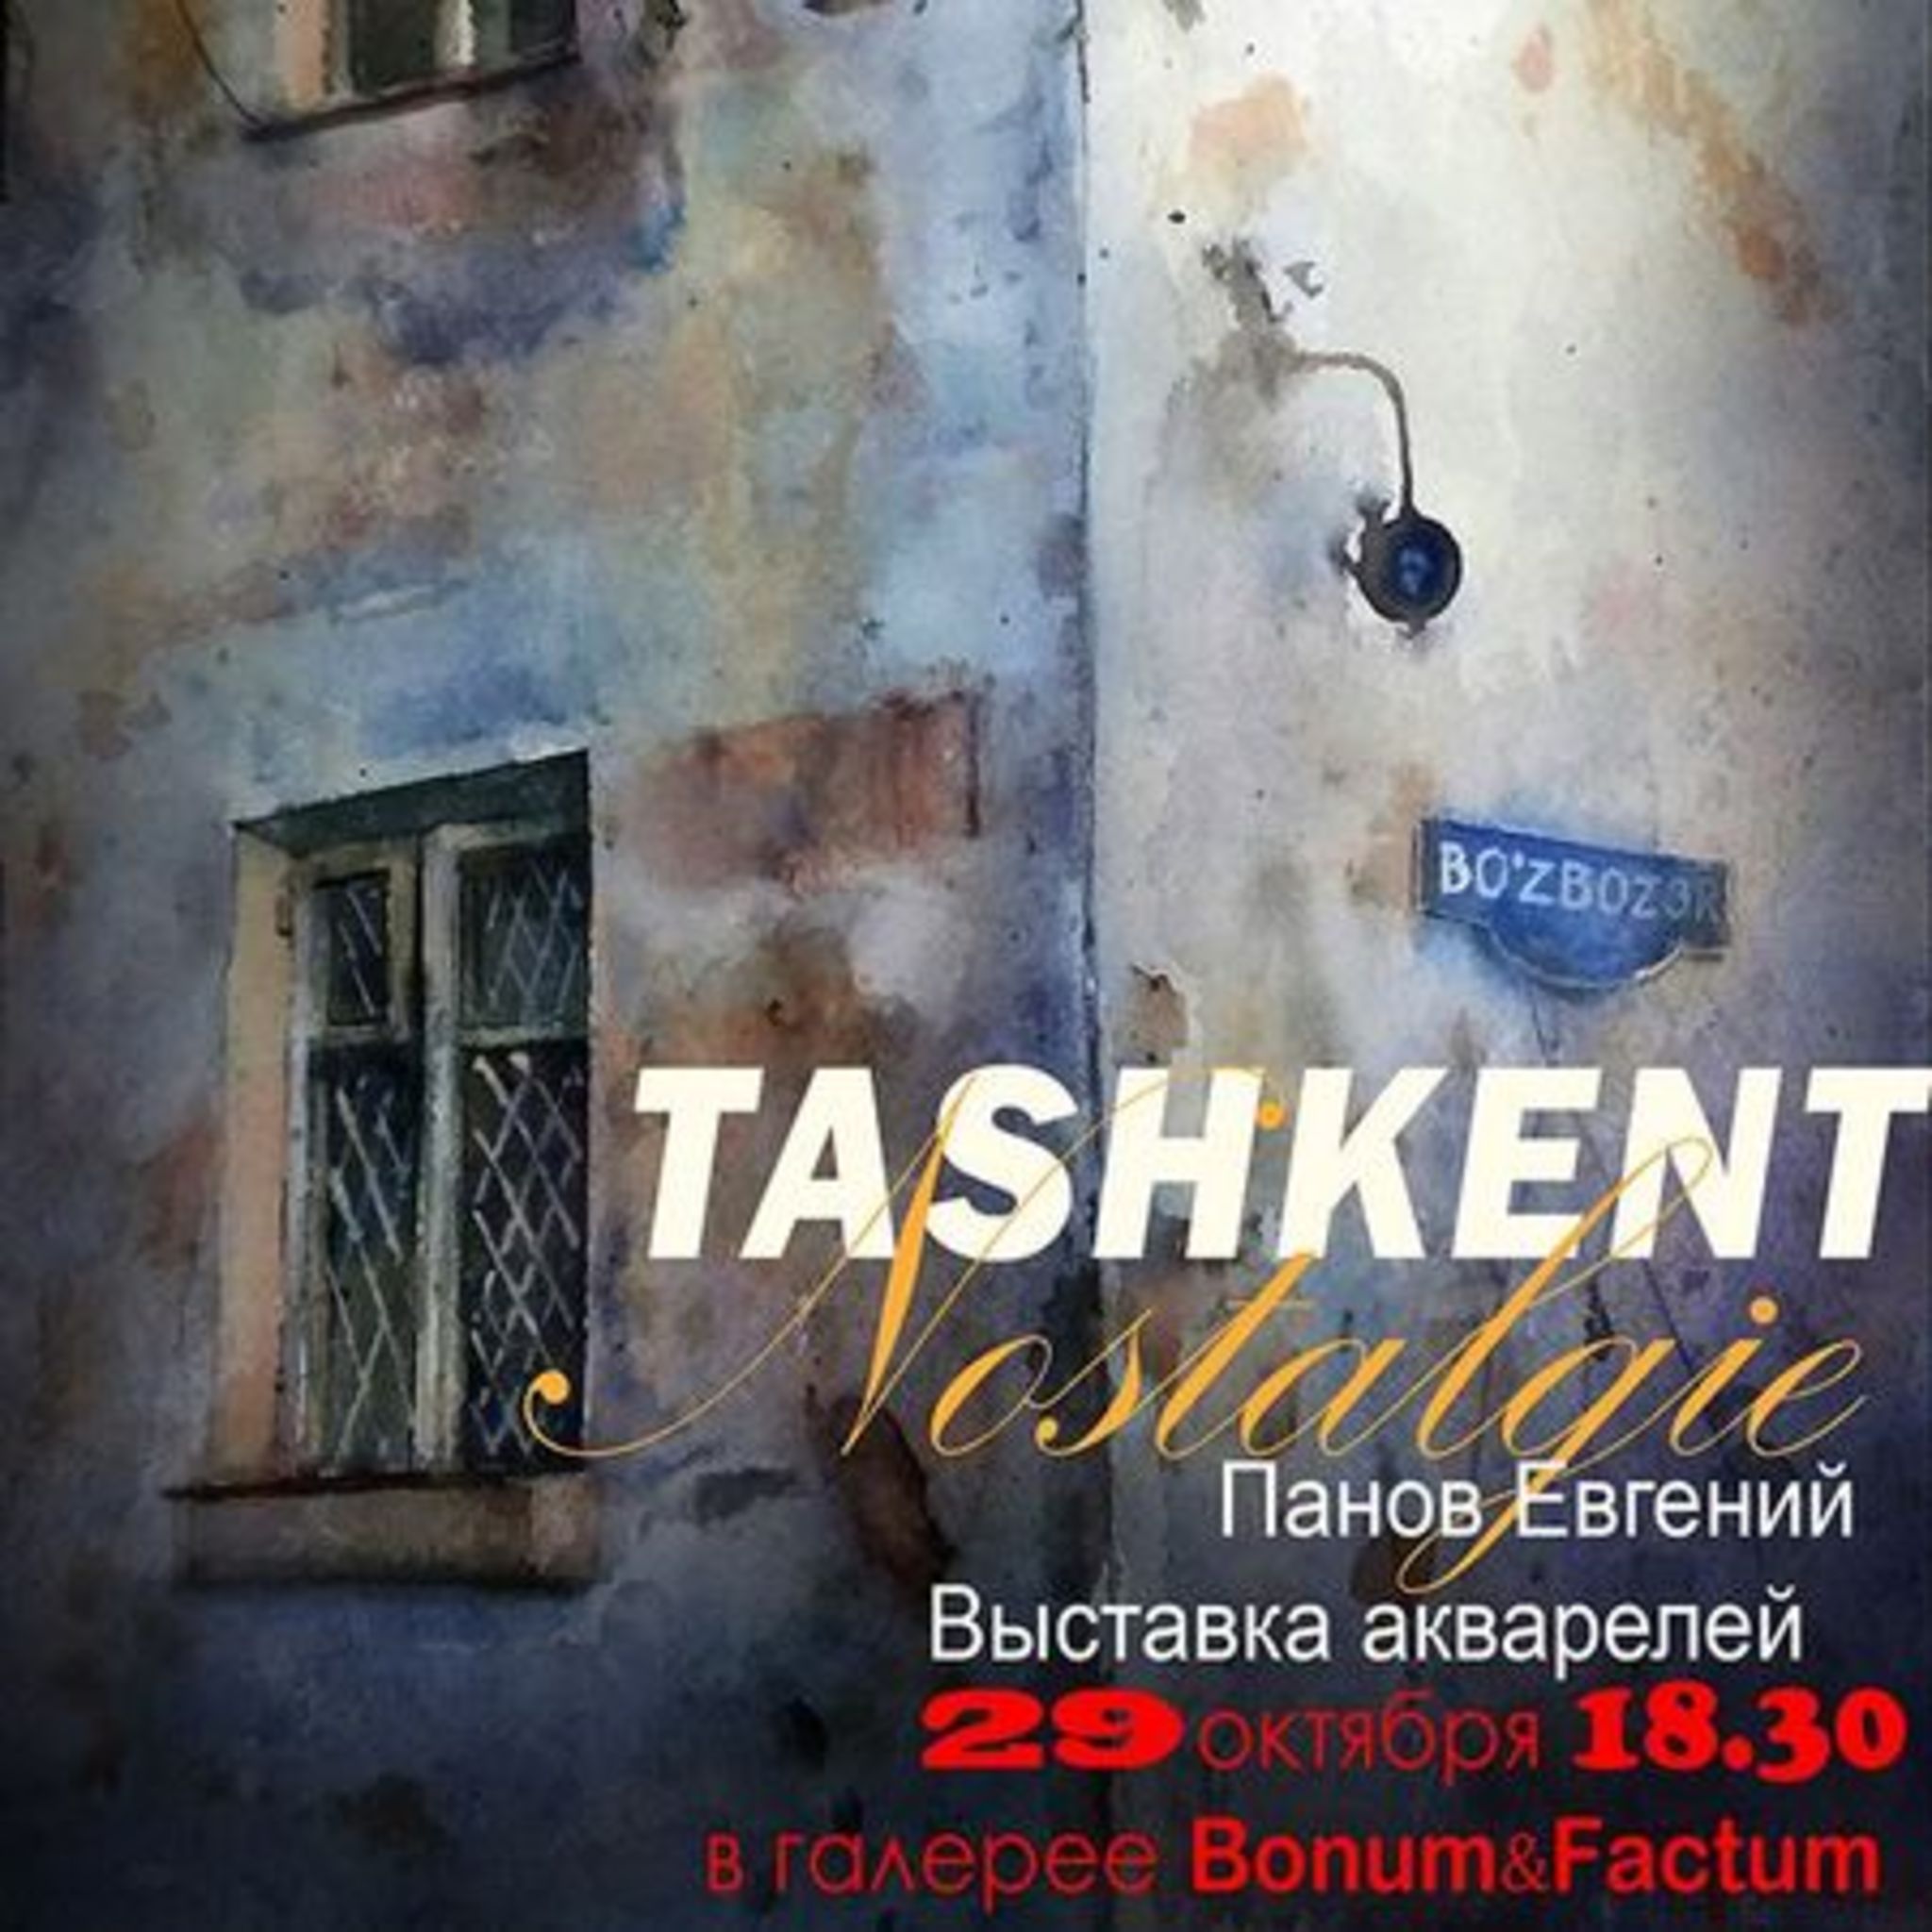 Exhibition of watercolors Evgeny Panov Tashkent. Nostalgie